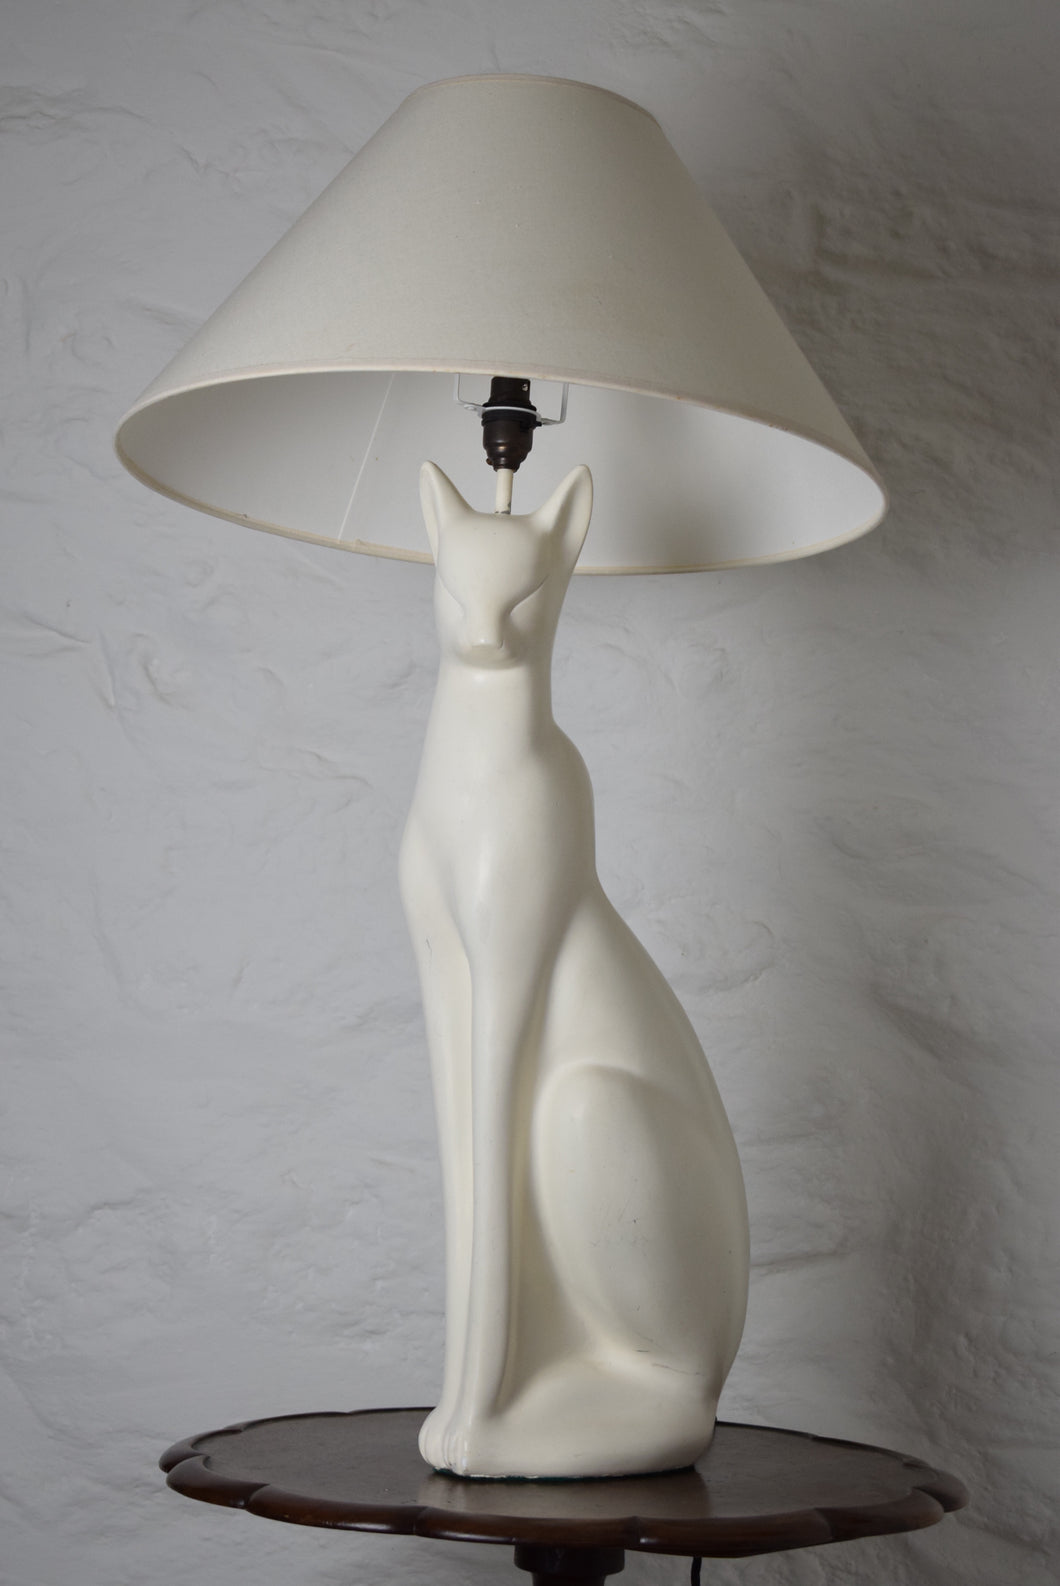 White Cat Table Lamp